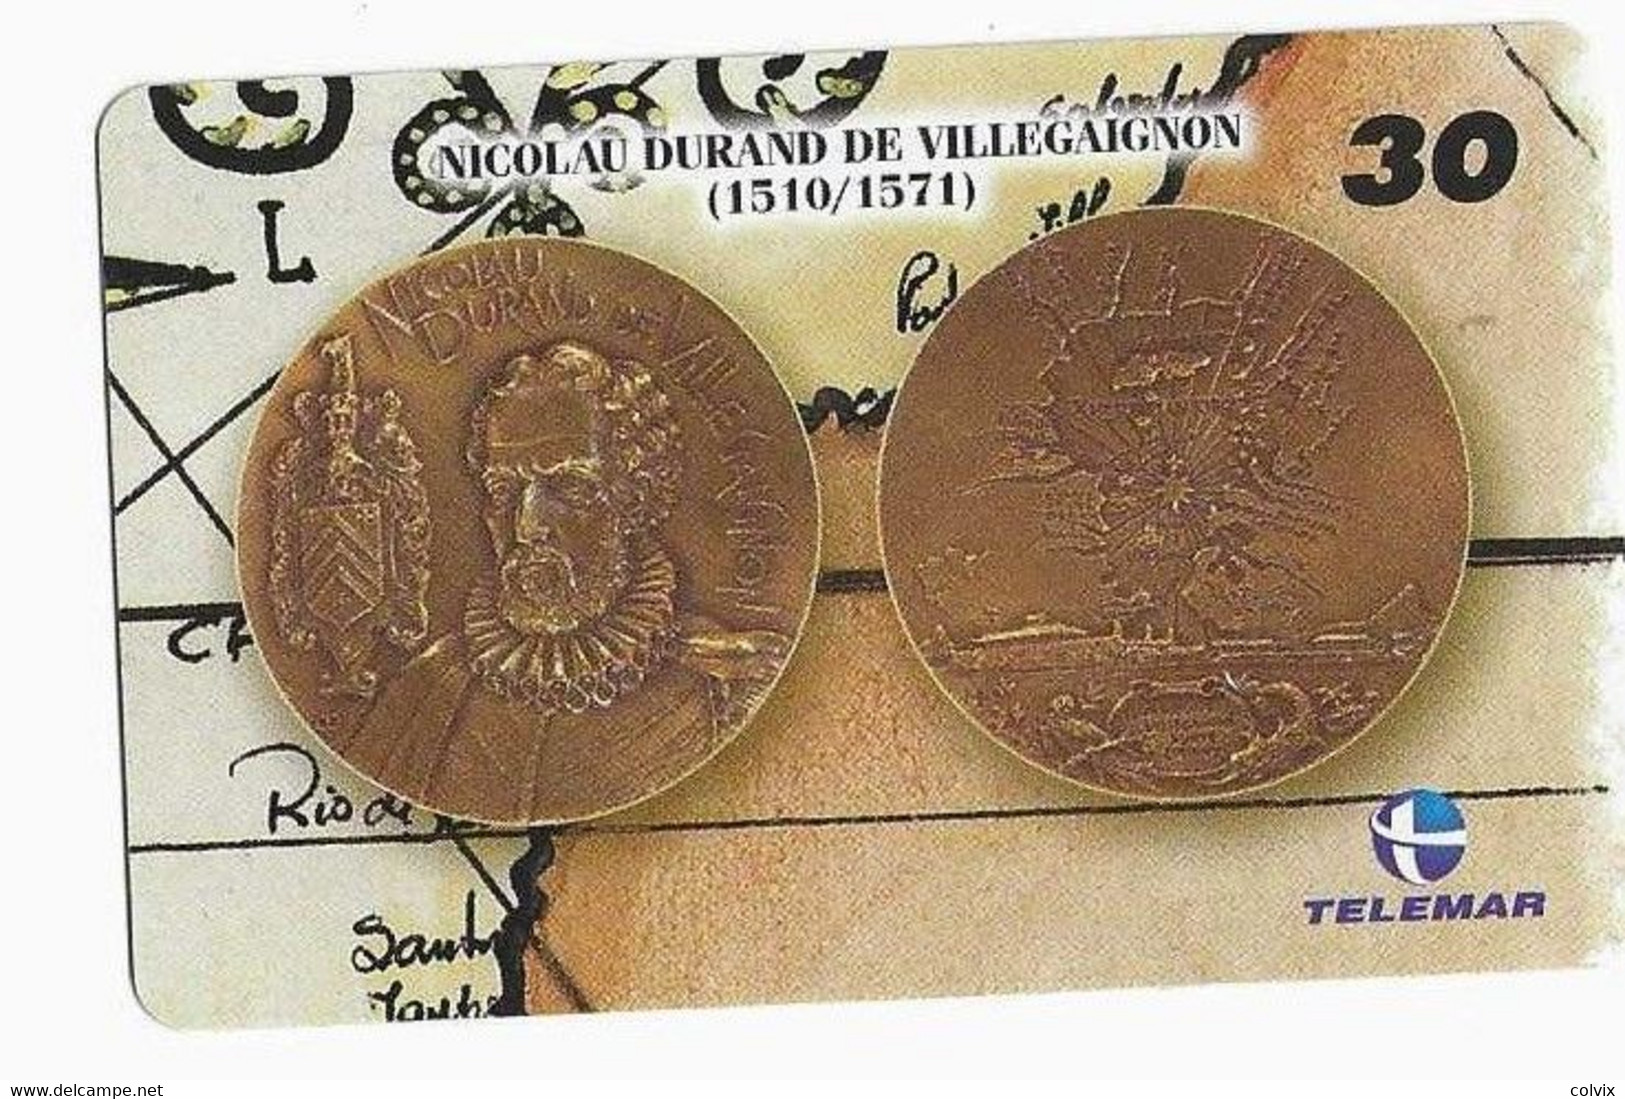 BRESIL TELECARTE MONNAIE NICOLAU DURAND DE VILLEGAIGNON - Timbres & Monnaies